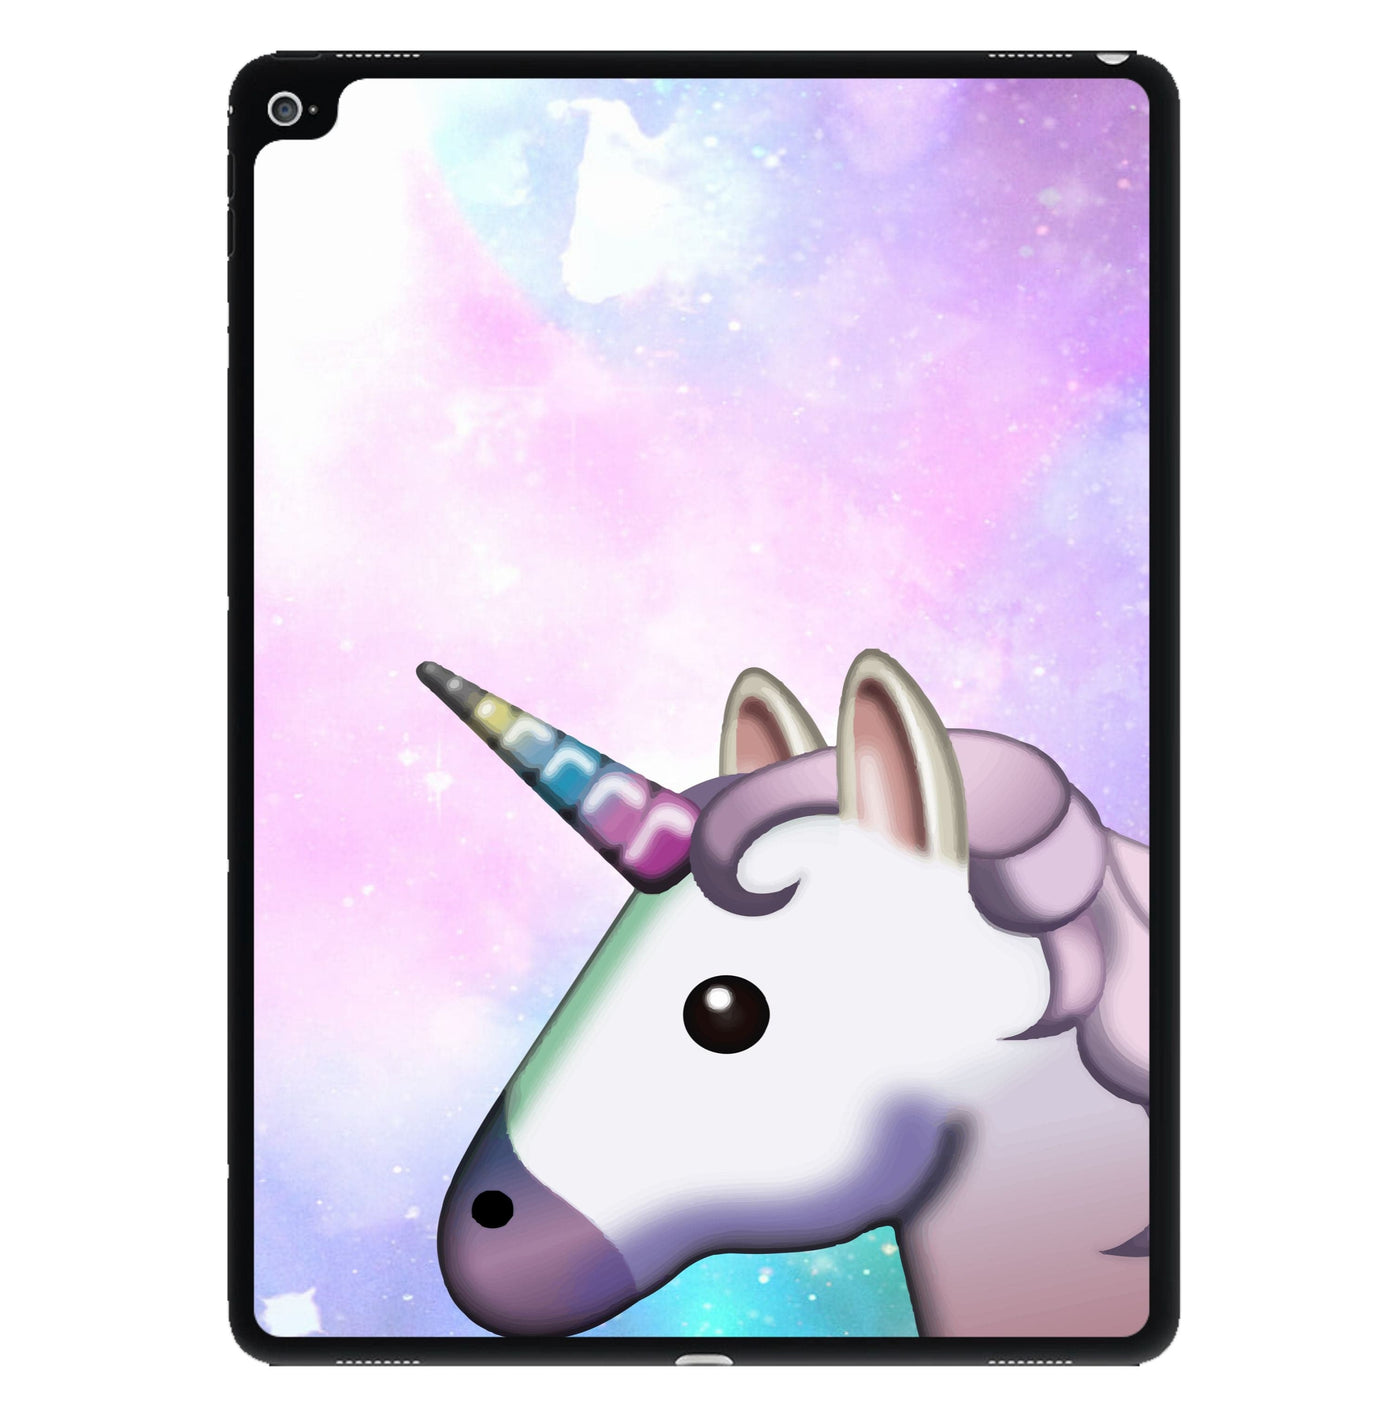 Galaxy Unicorn Pattern - Tumblr iPad Case